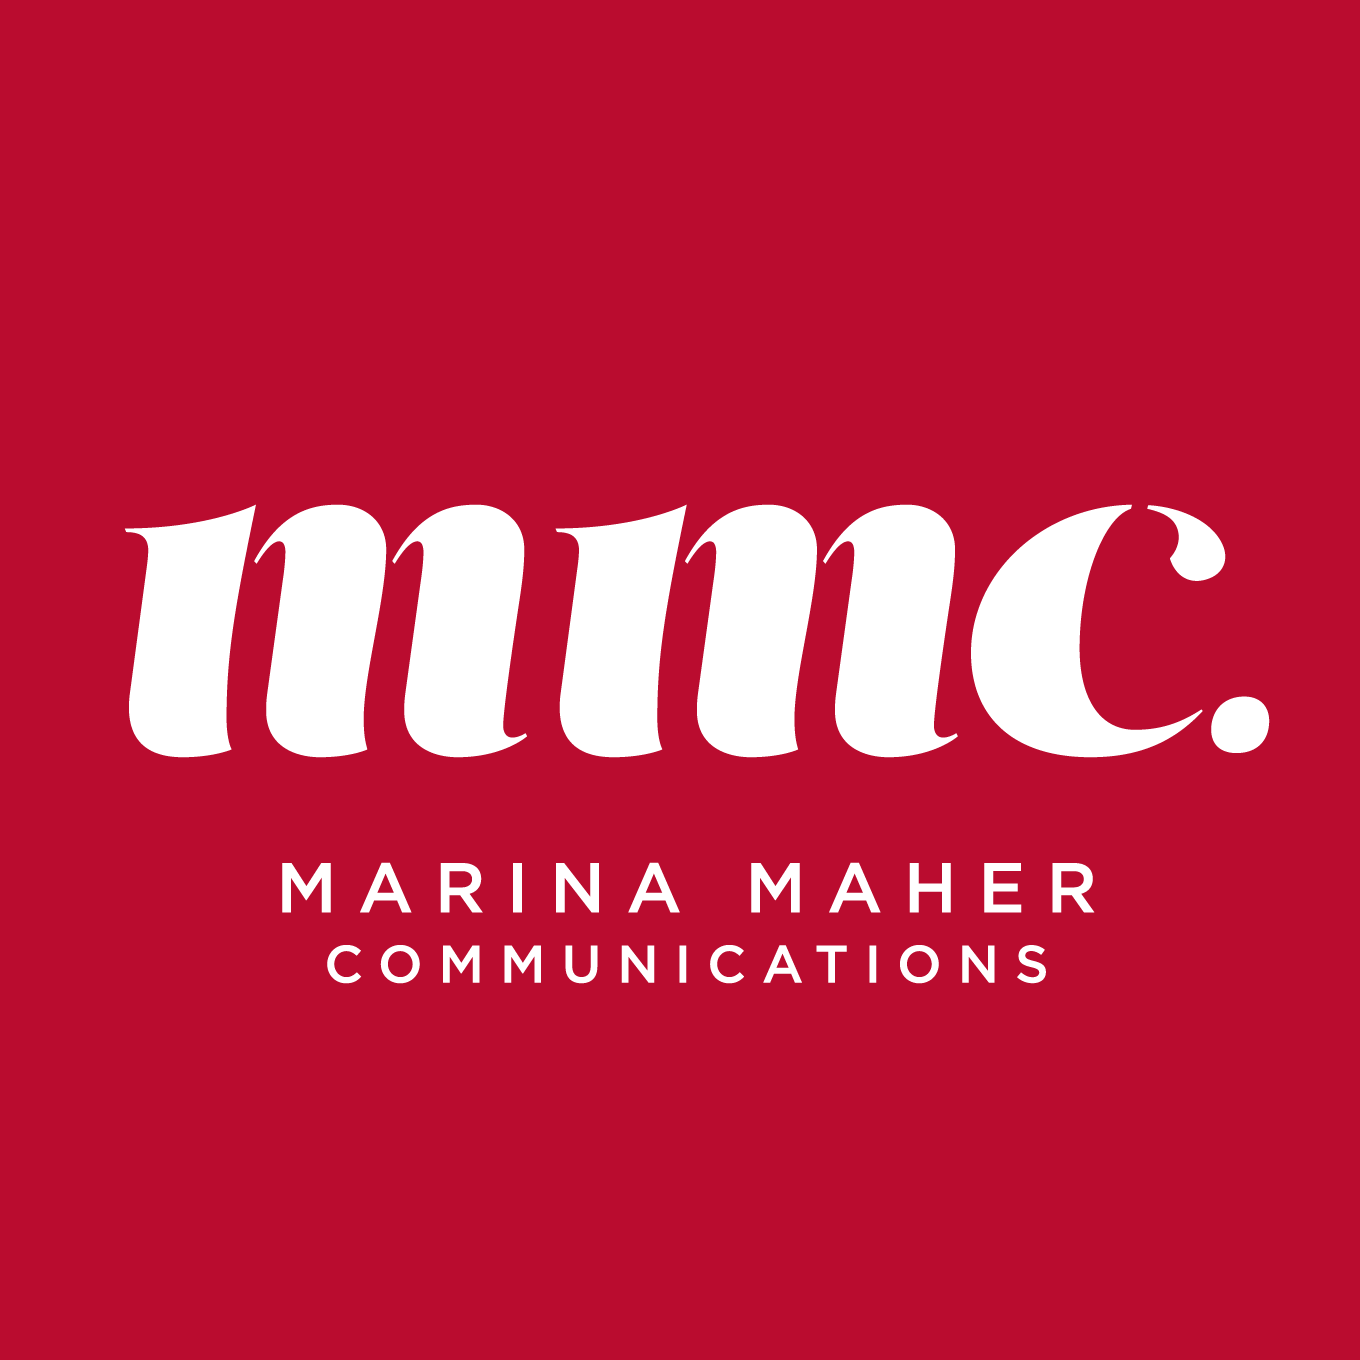 Marina Maher Communications